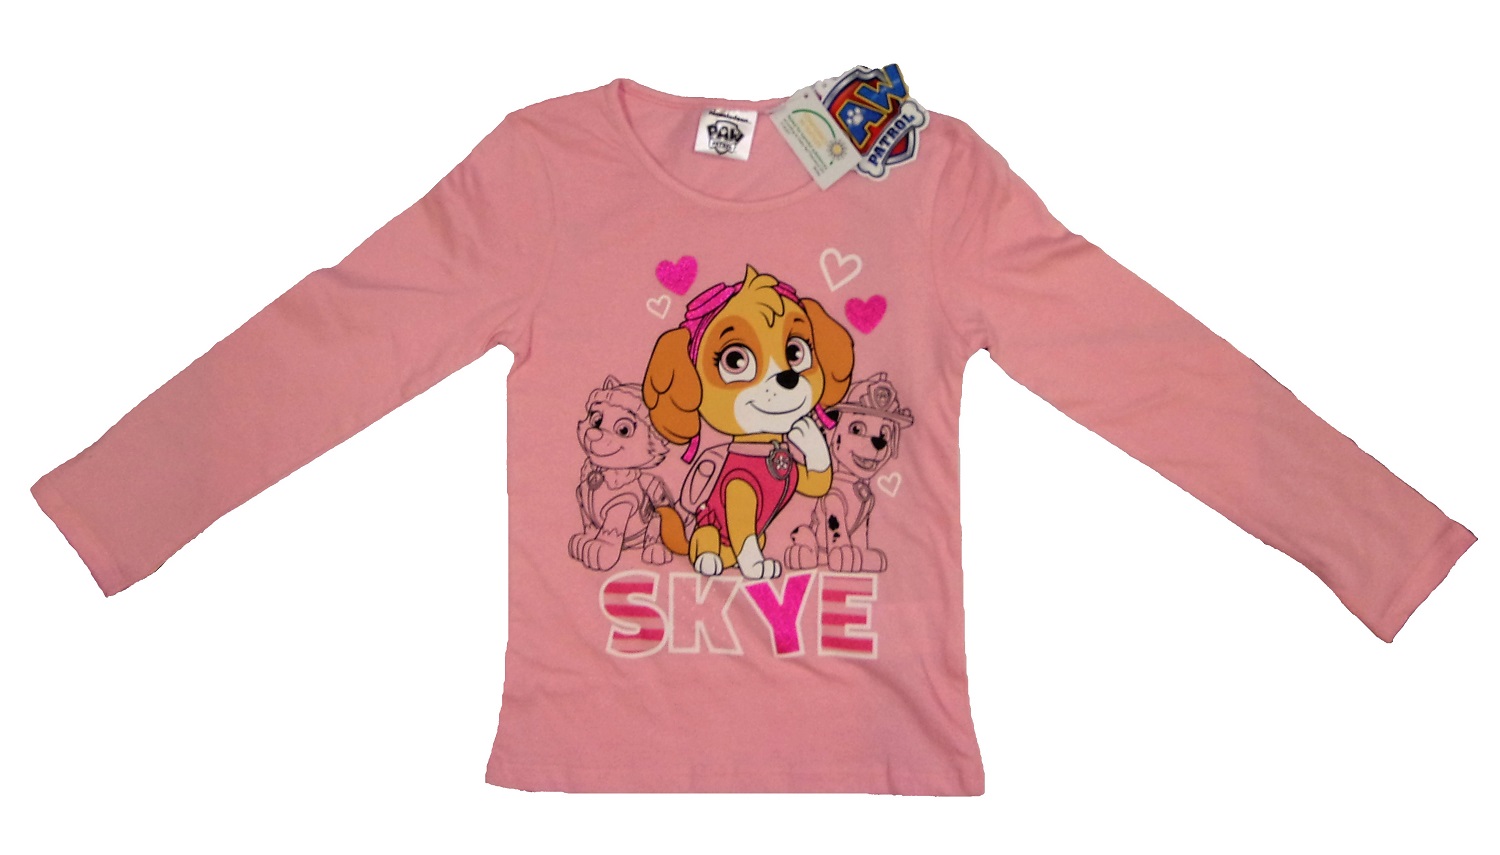 Nickelodeon Paw Patrol Langarm-Shirt Skye rosa versch. Gr. (Auswahl)